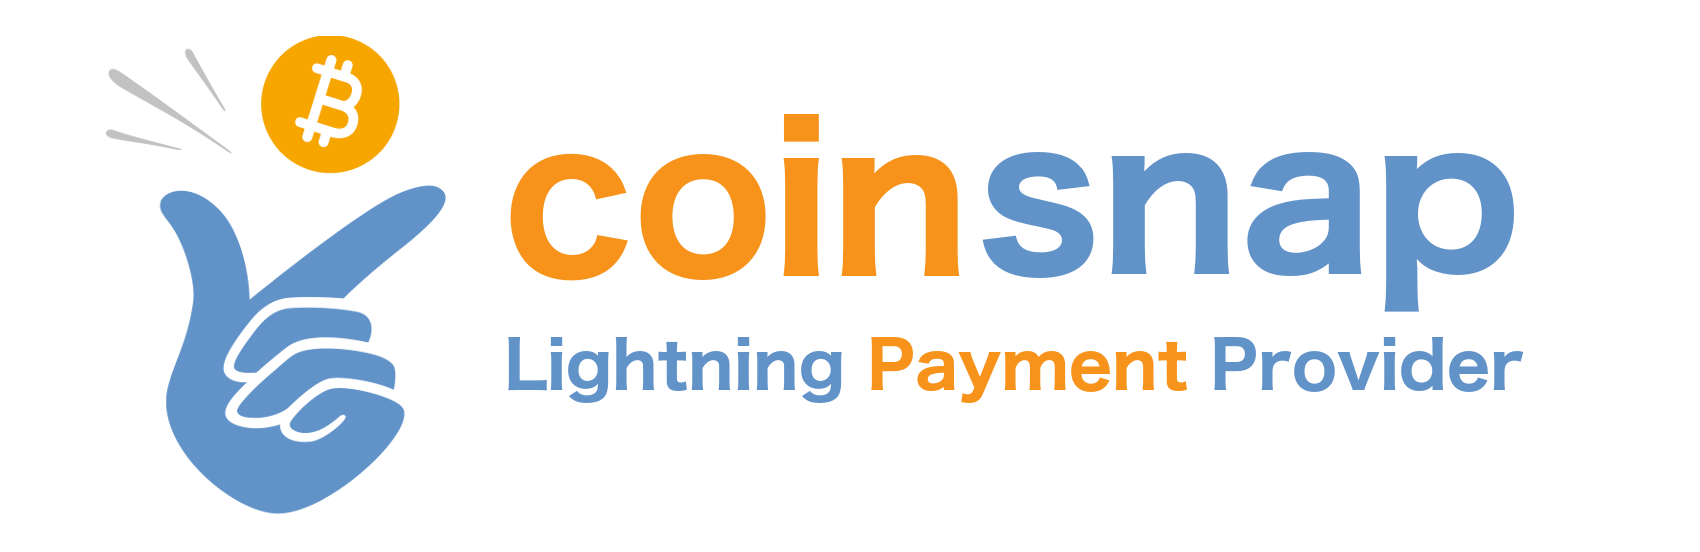 coinsnap lightning payment provider